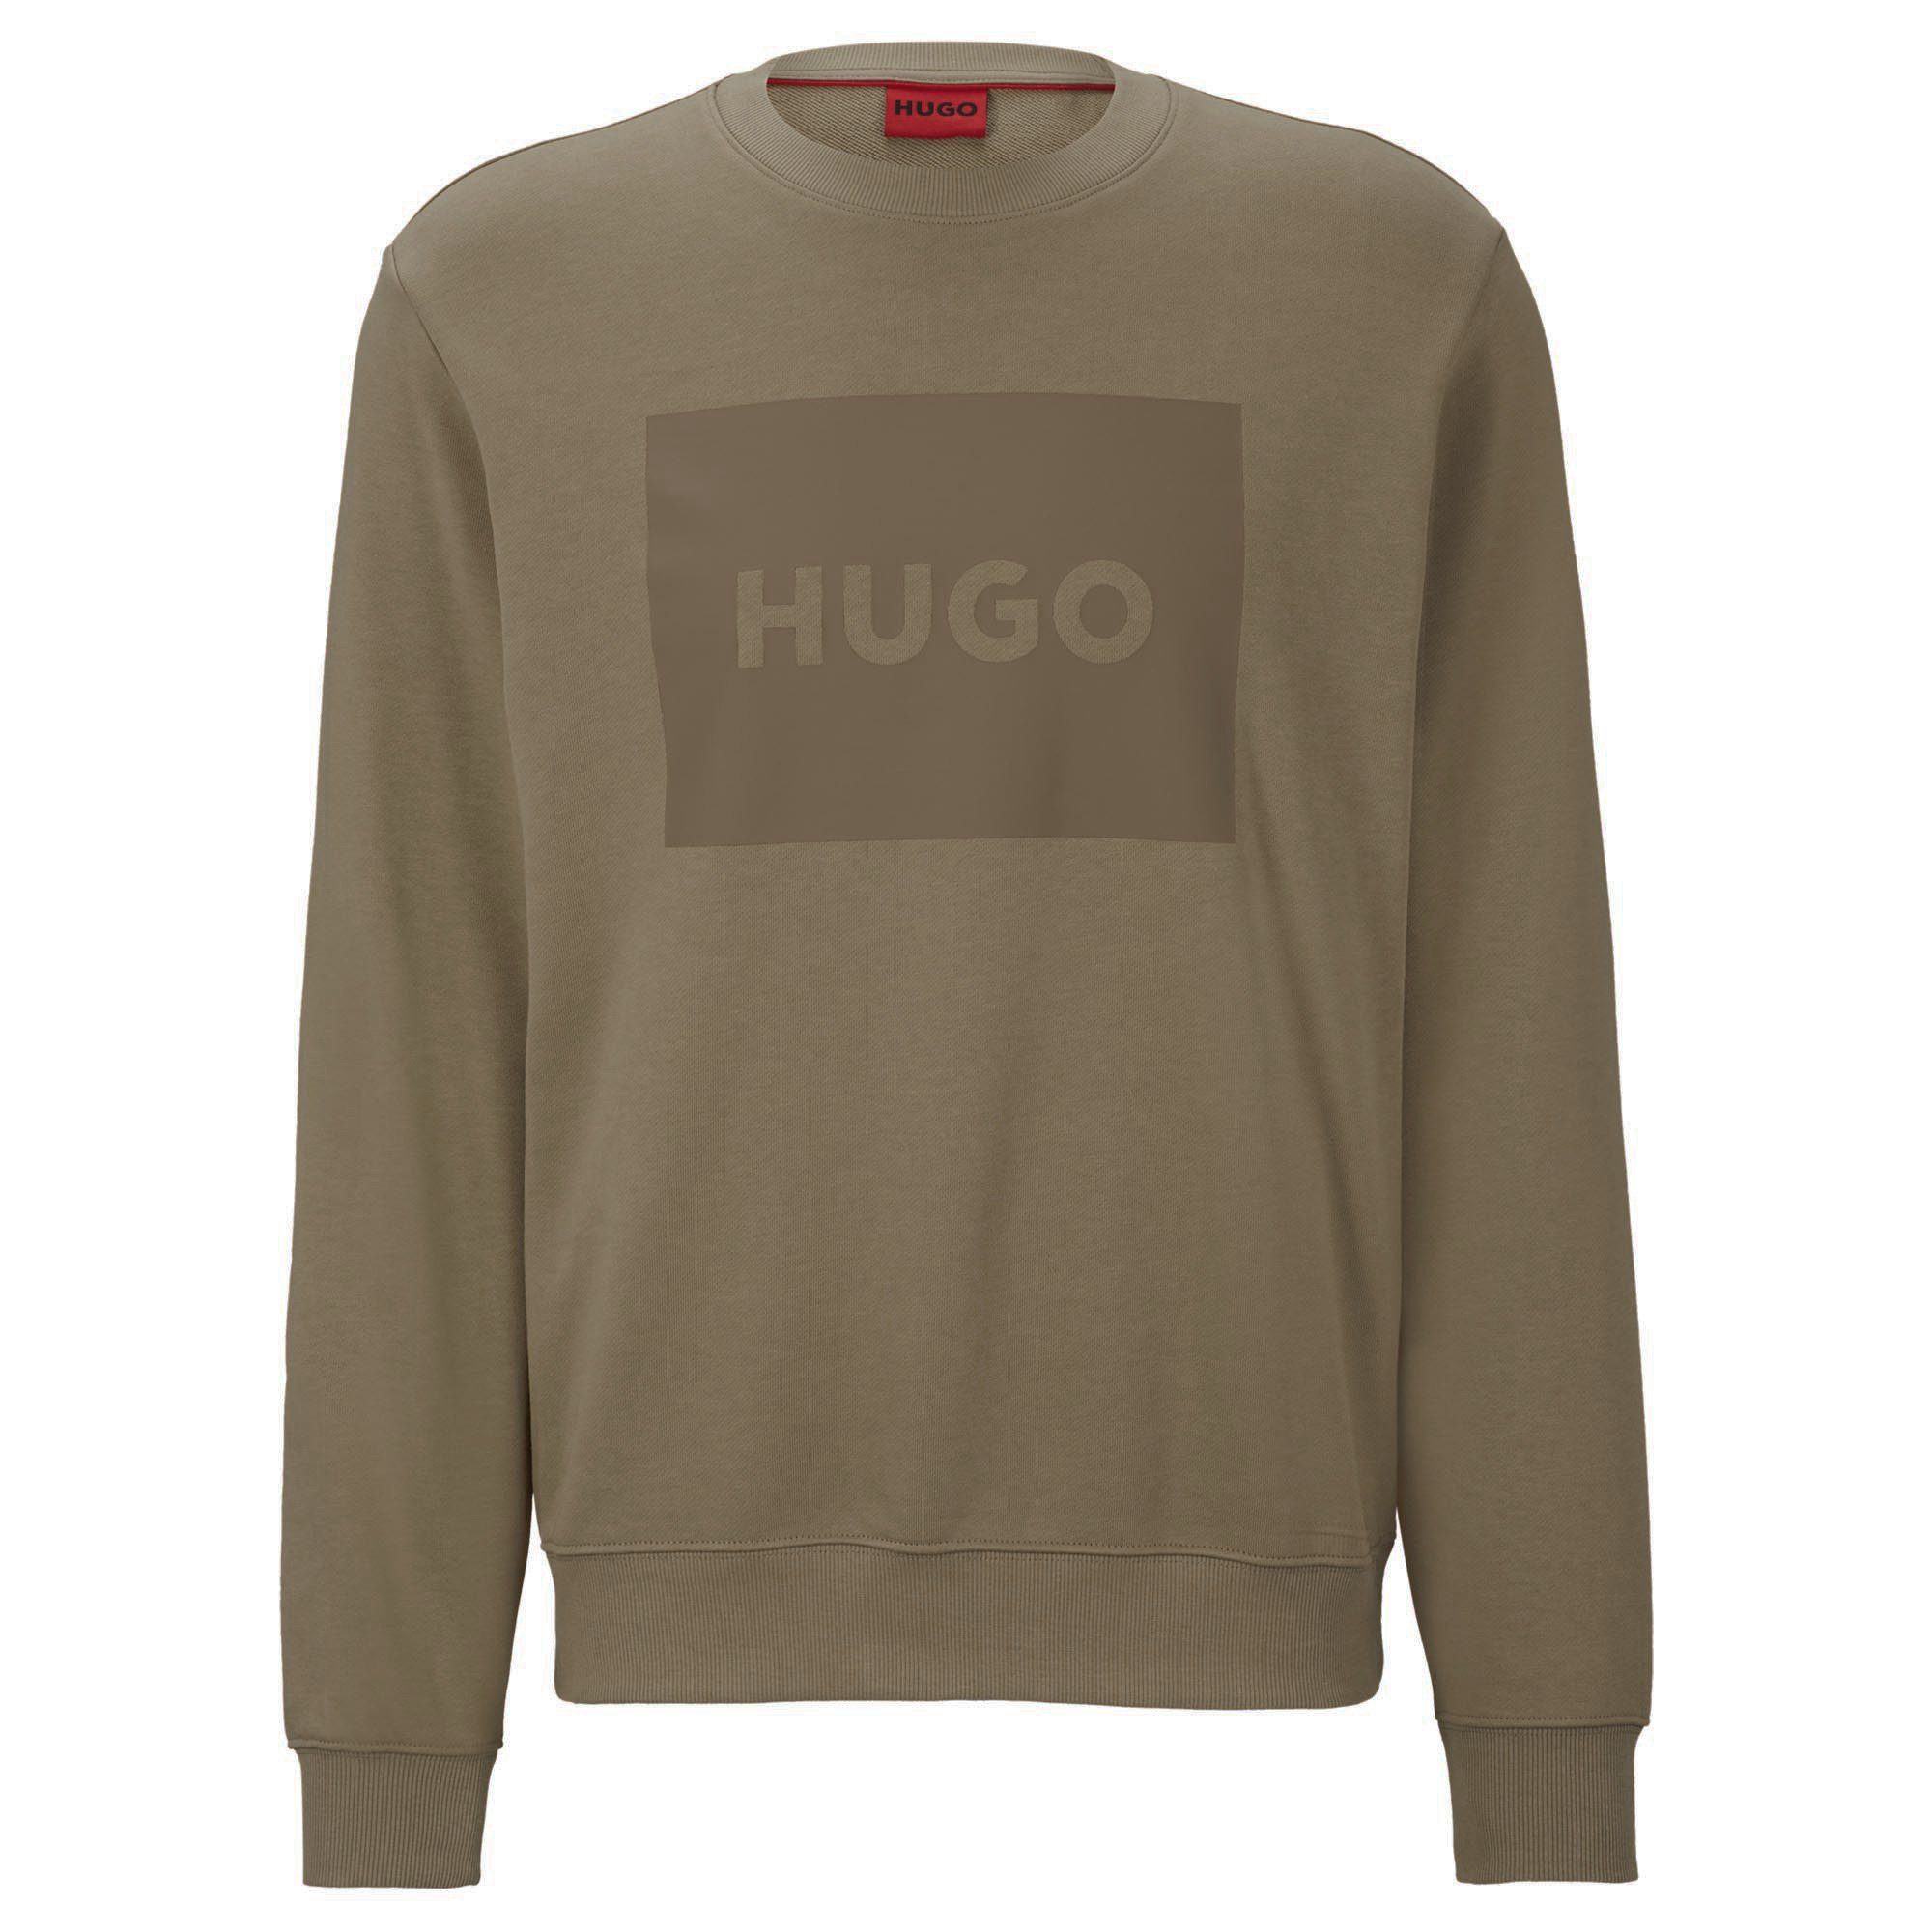 HUGO Sweatshirt Sweater Herren Duragol222, Braun Rundhals - Sweatshirt